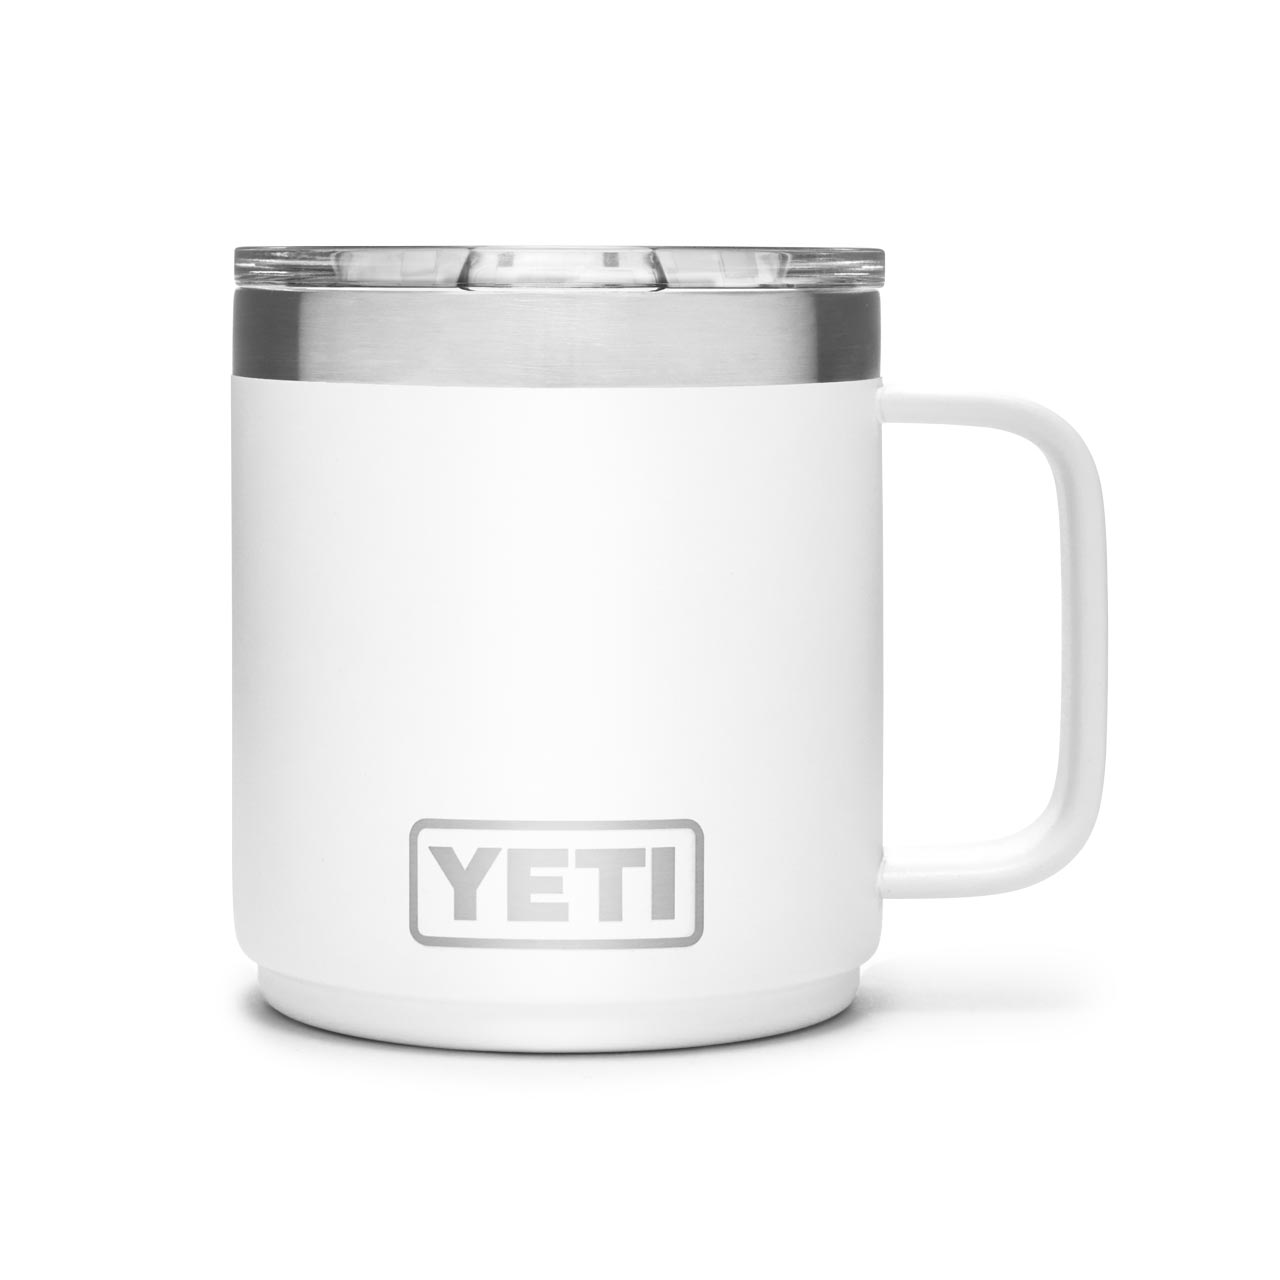 YETI Rambler Mug, 296 ml, White